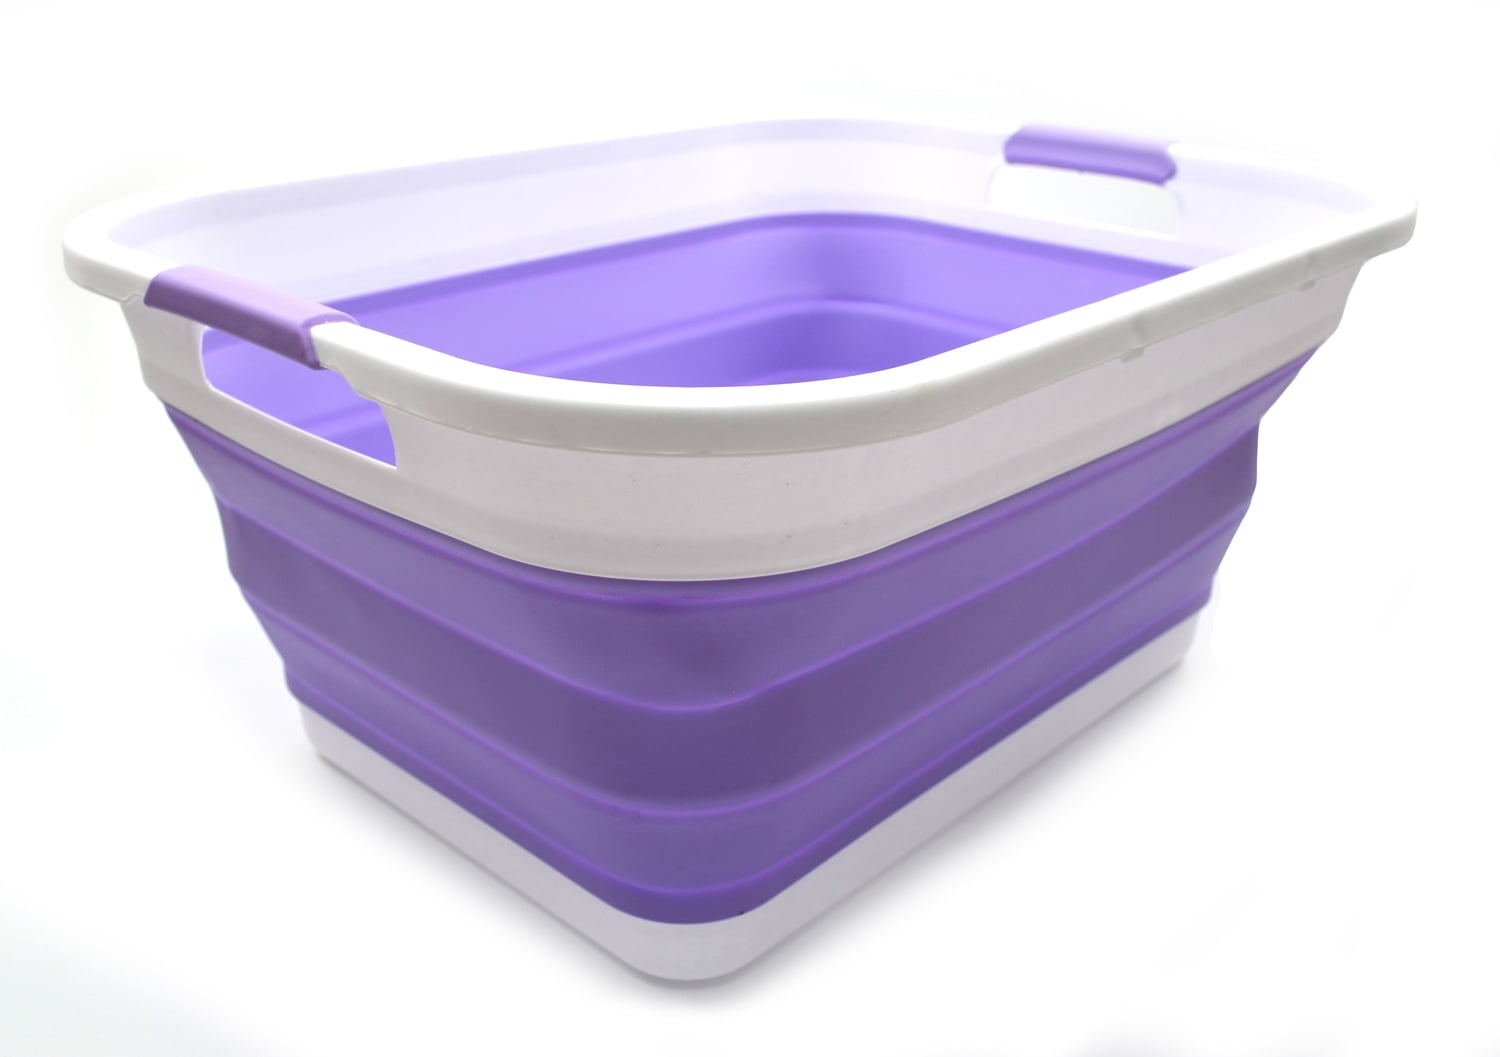 SAMMART Collapsible Plastic Laundry Basket Foldable Pop Up Storage Container/Organizer White/Grey, 1 Portable Washing Tub Space Saving Hamper/Basket 